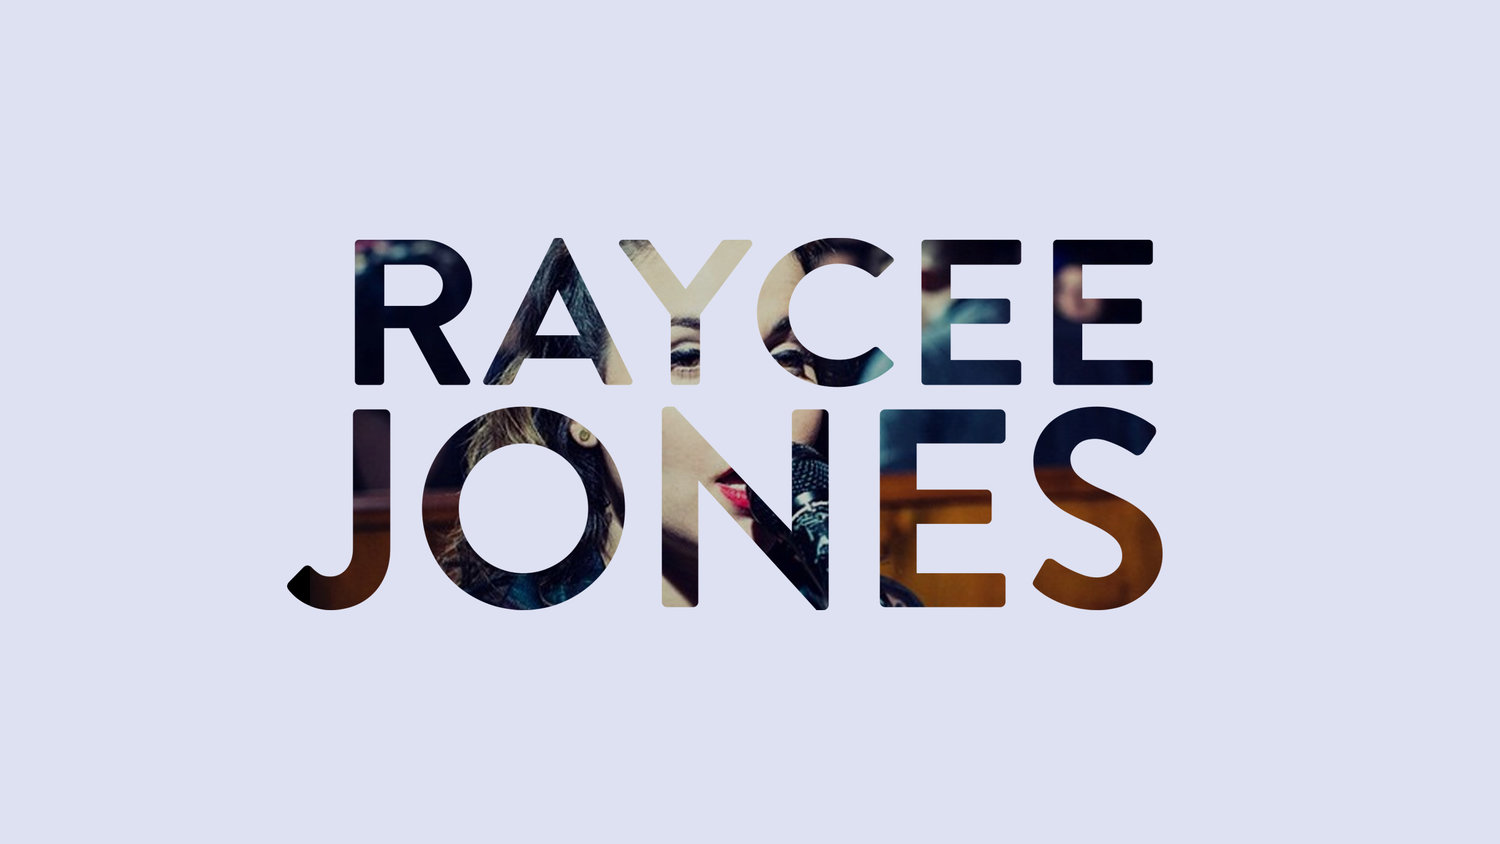 Raycee Jones